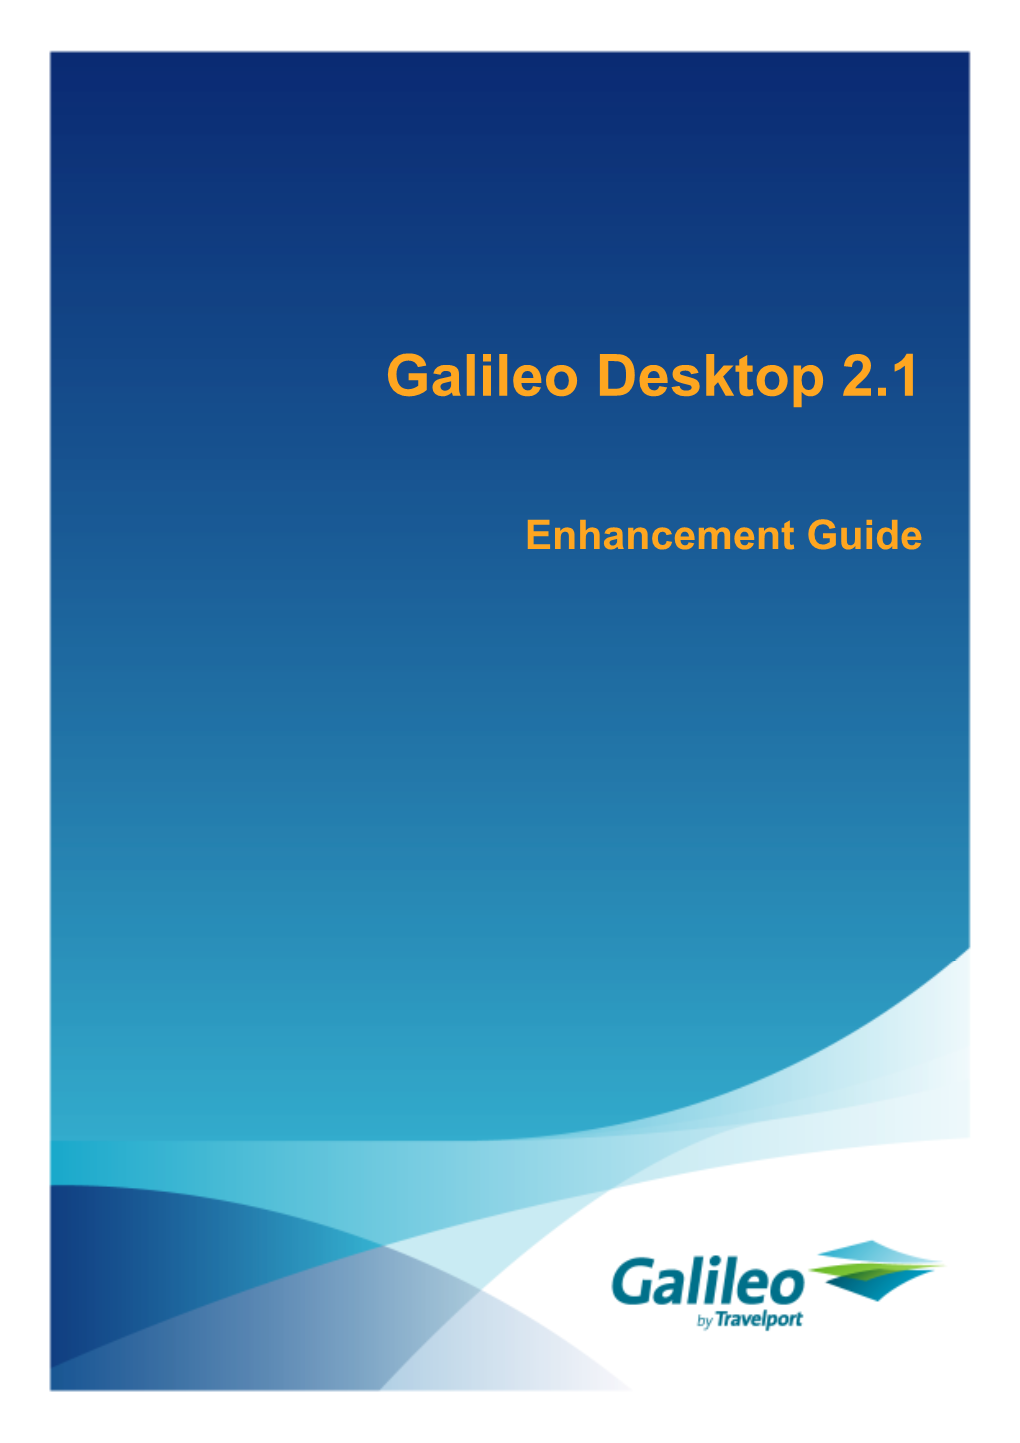 Galileo Desktop 2.1